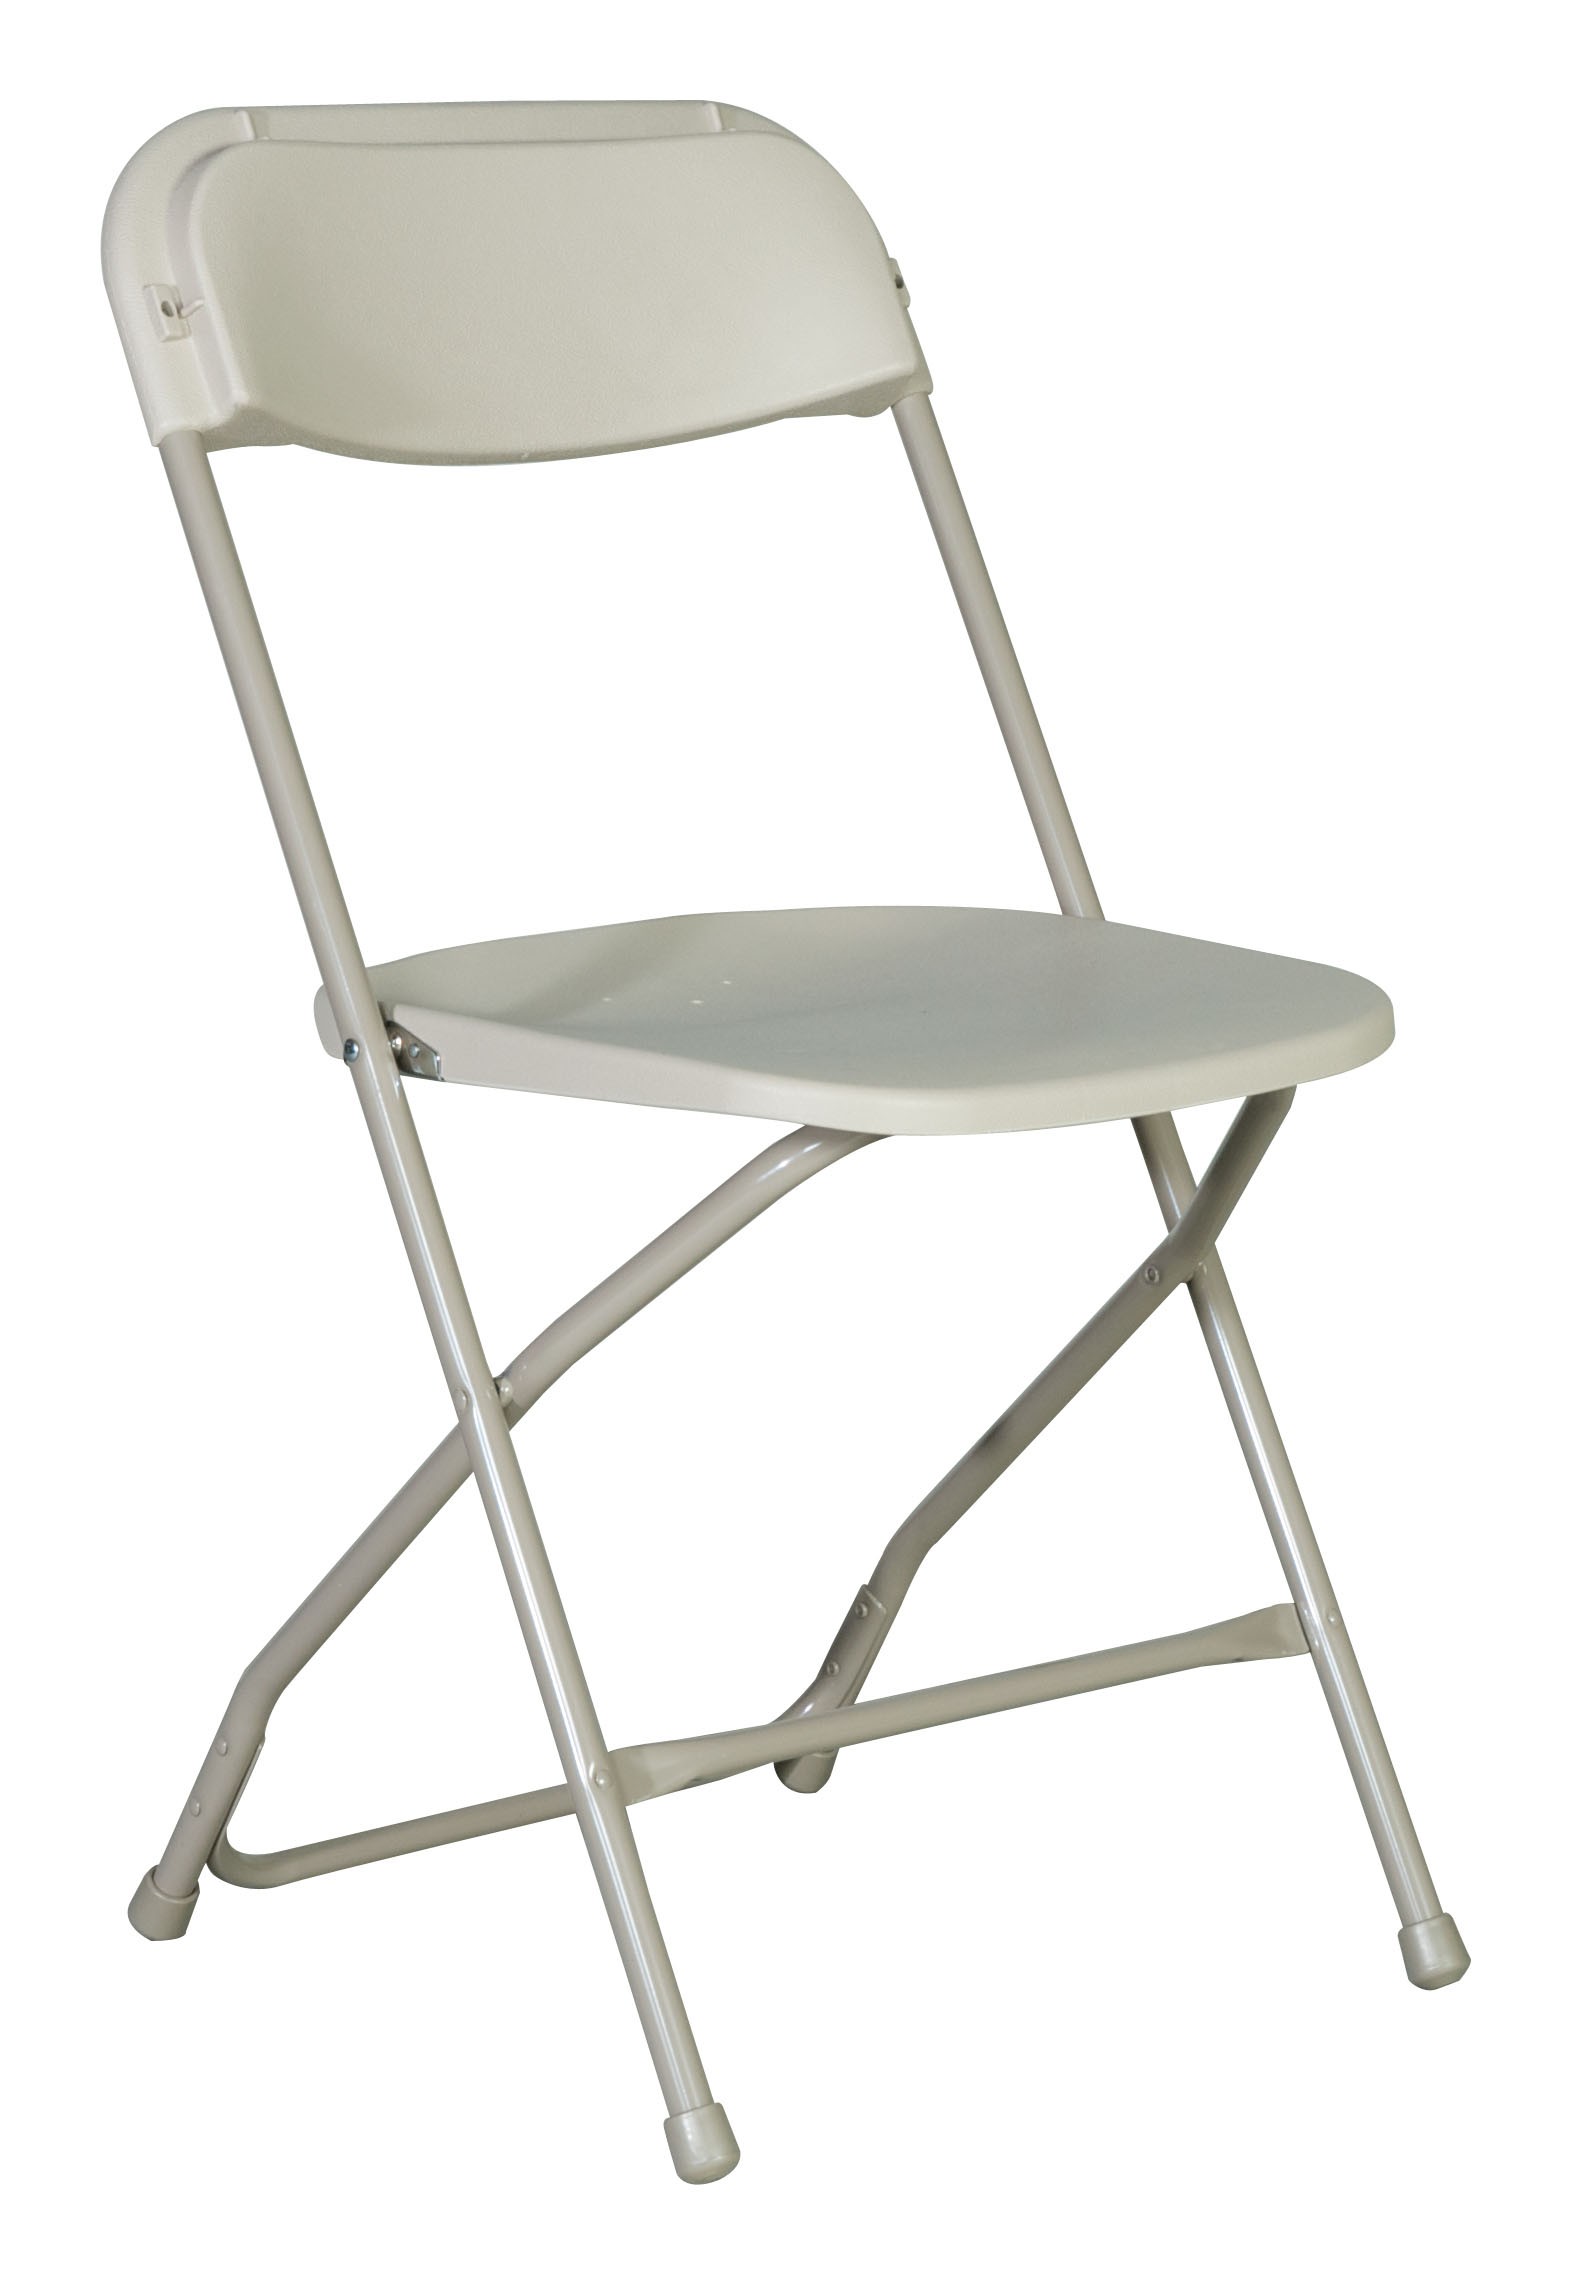 Bone Plastic Folding Chair 2 1 